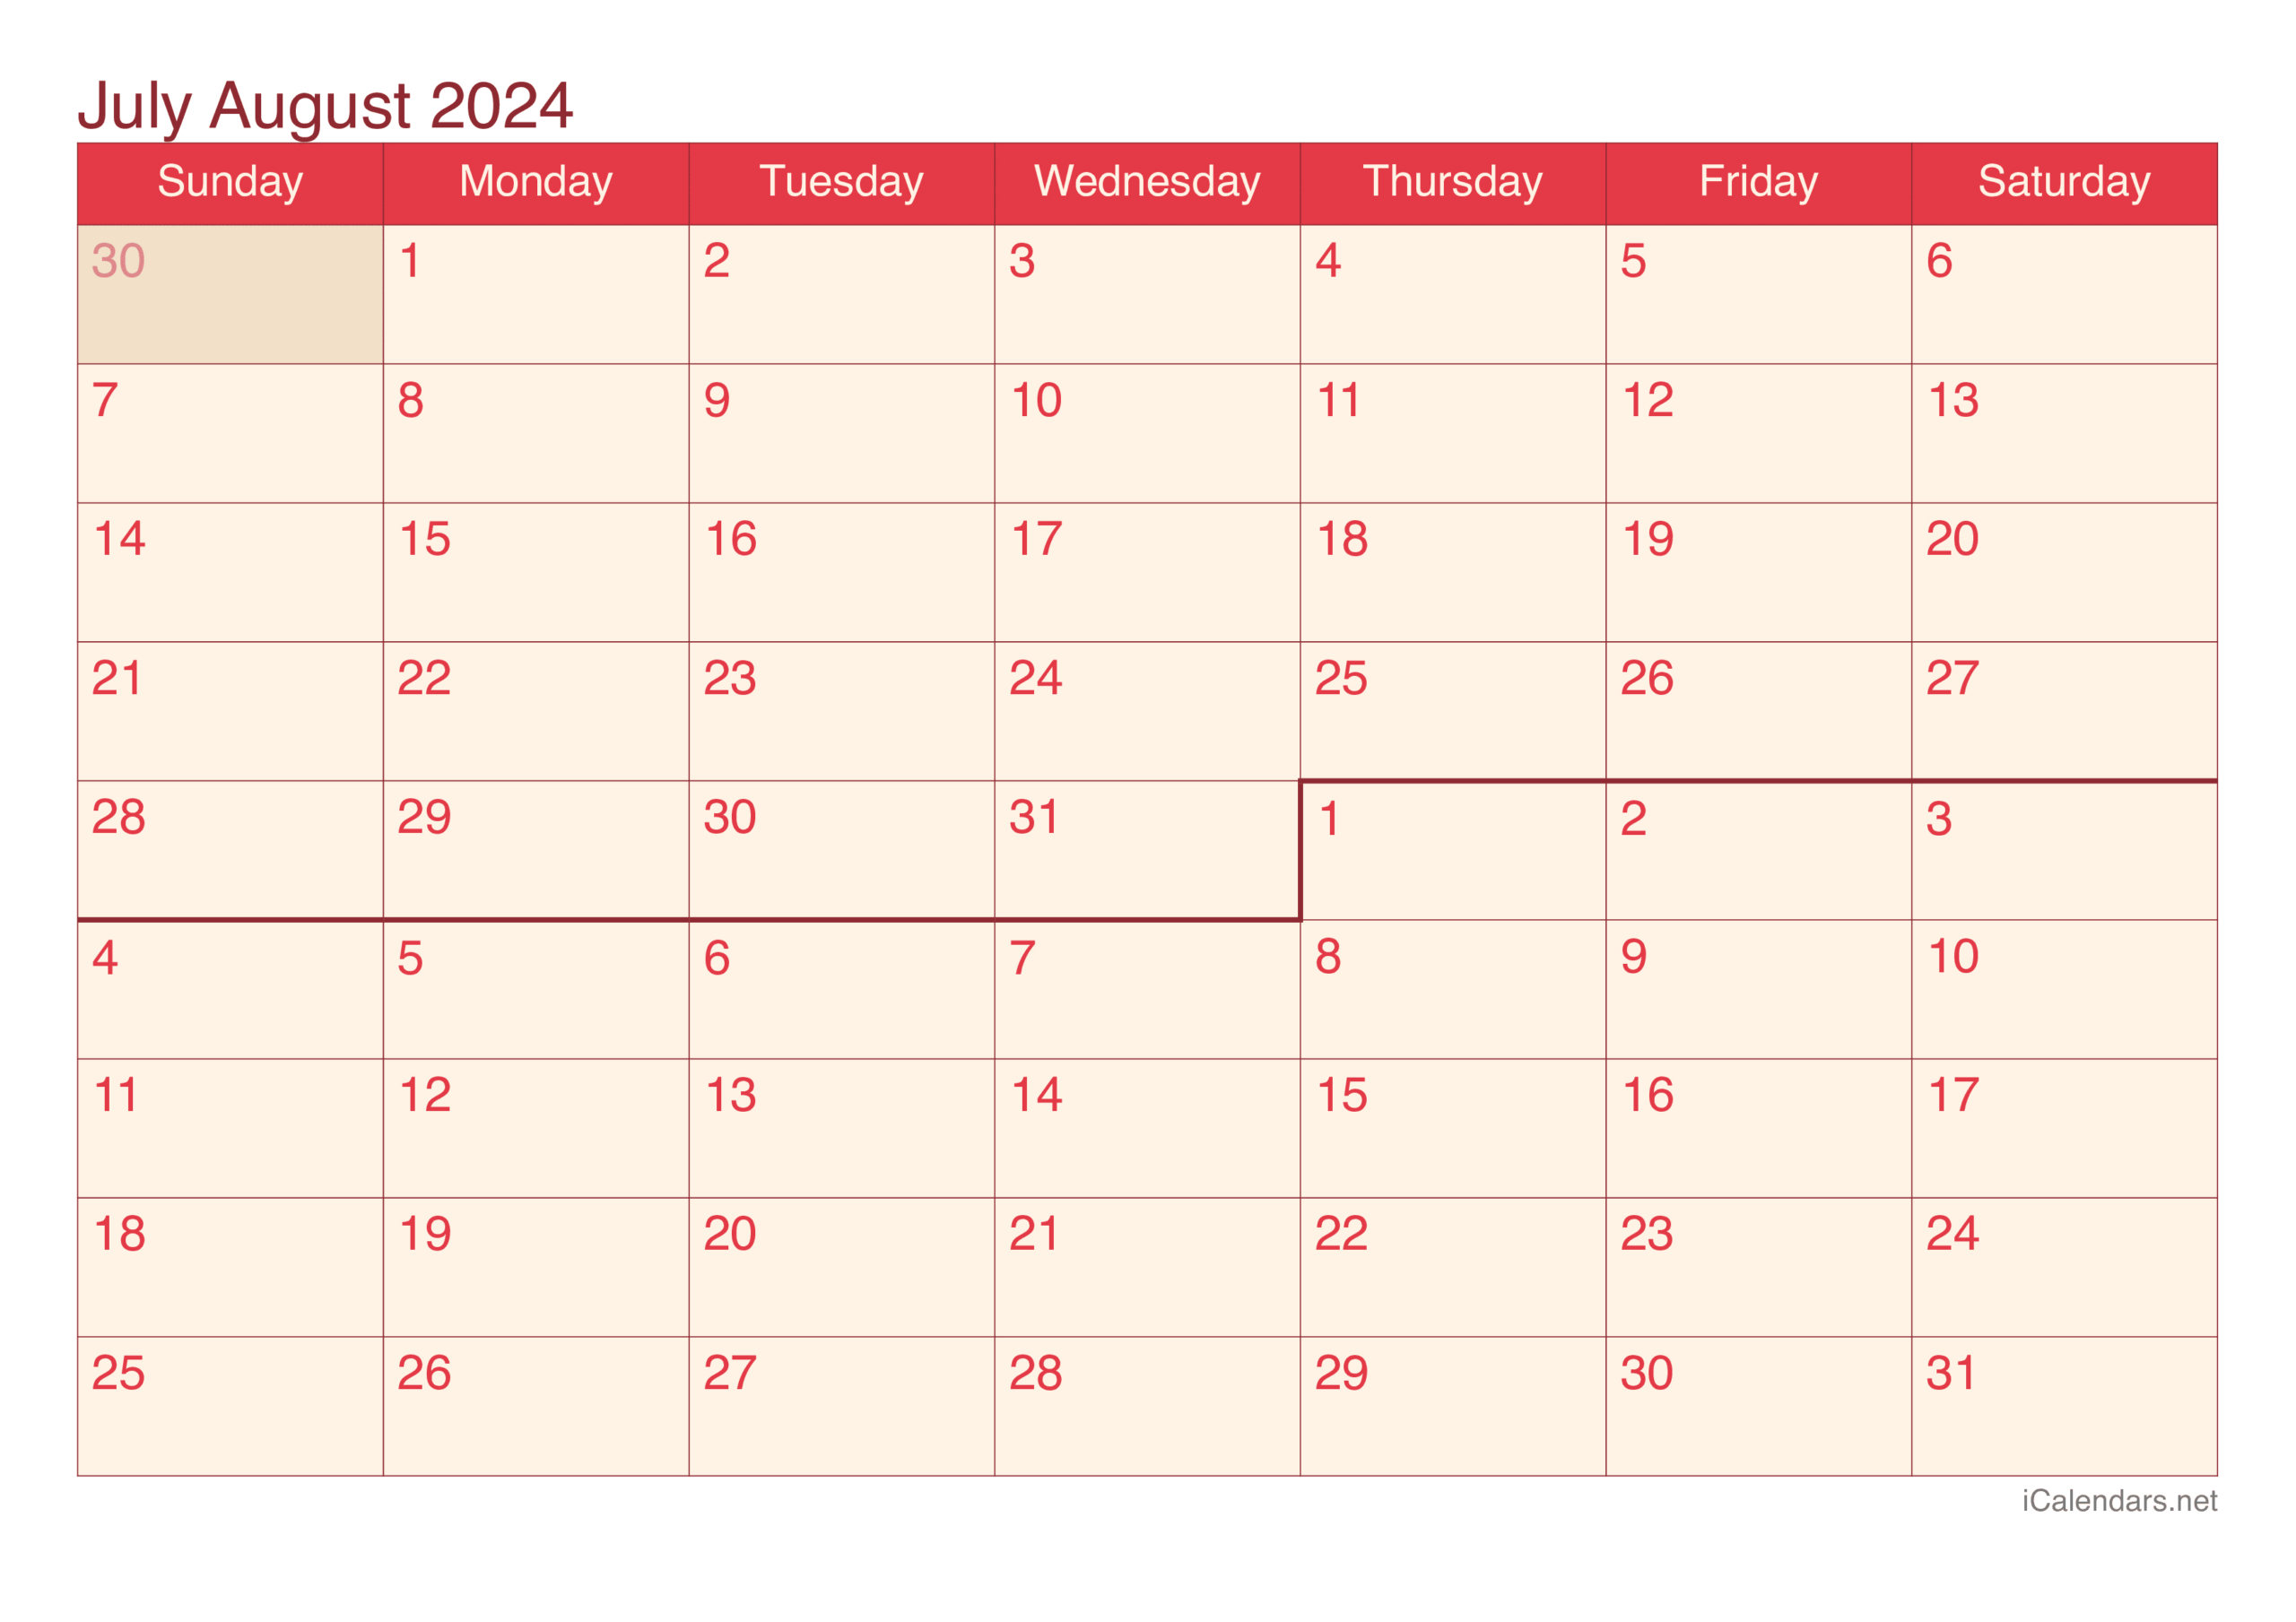 July And August 2024 Printable Calendar regarding 2024 July and August Calendar